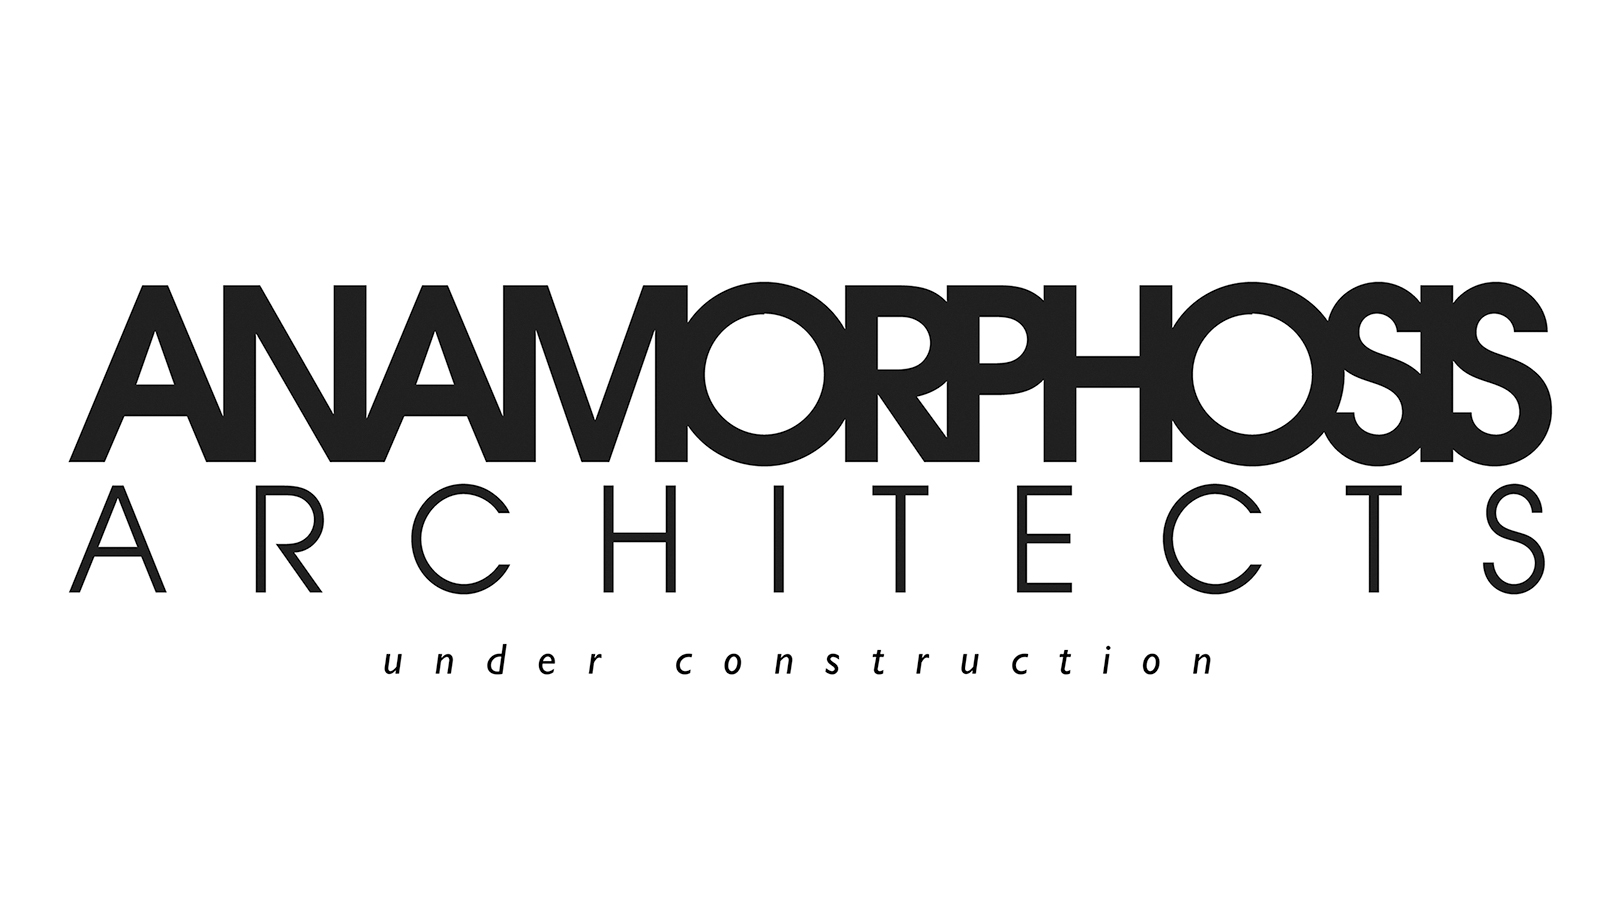 anamorphosis-under-construction